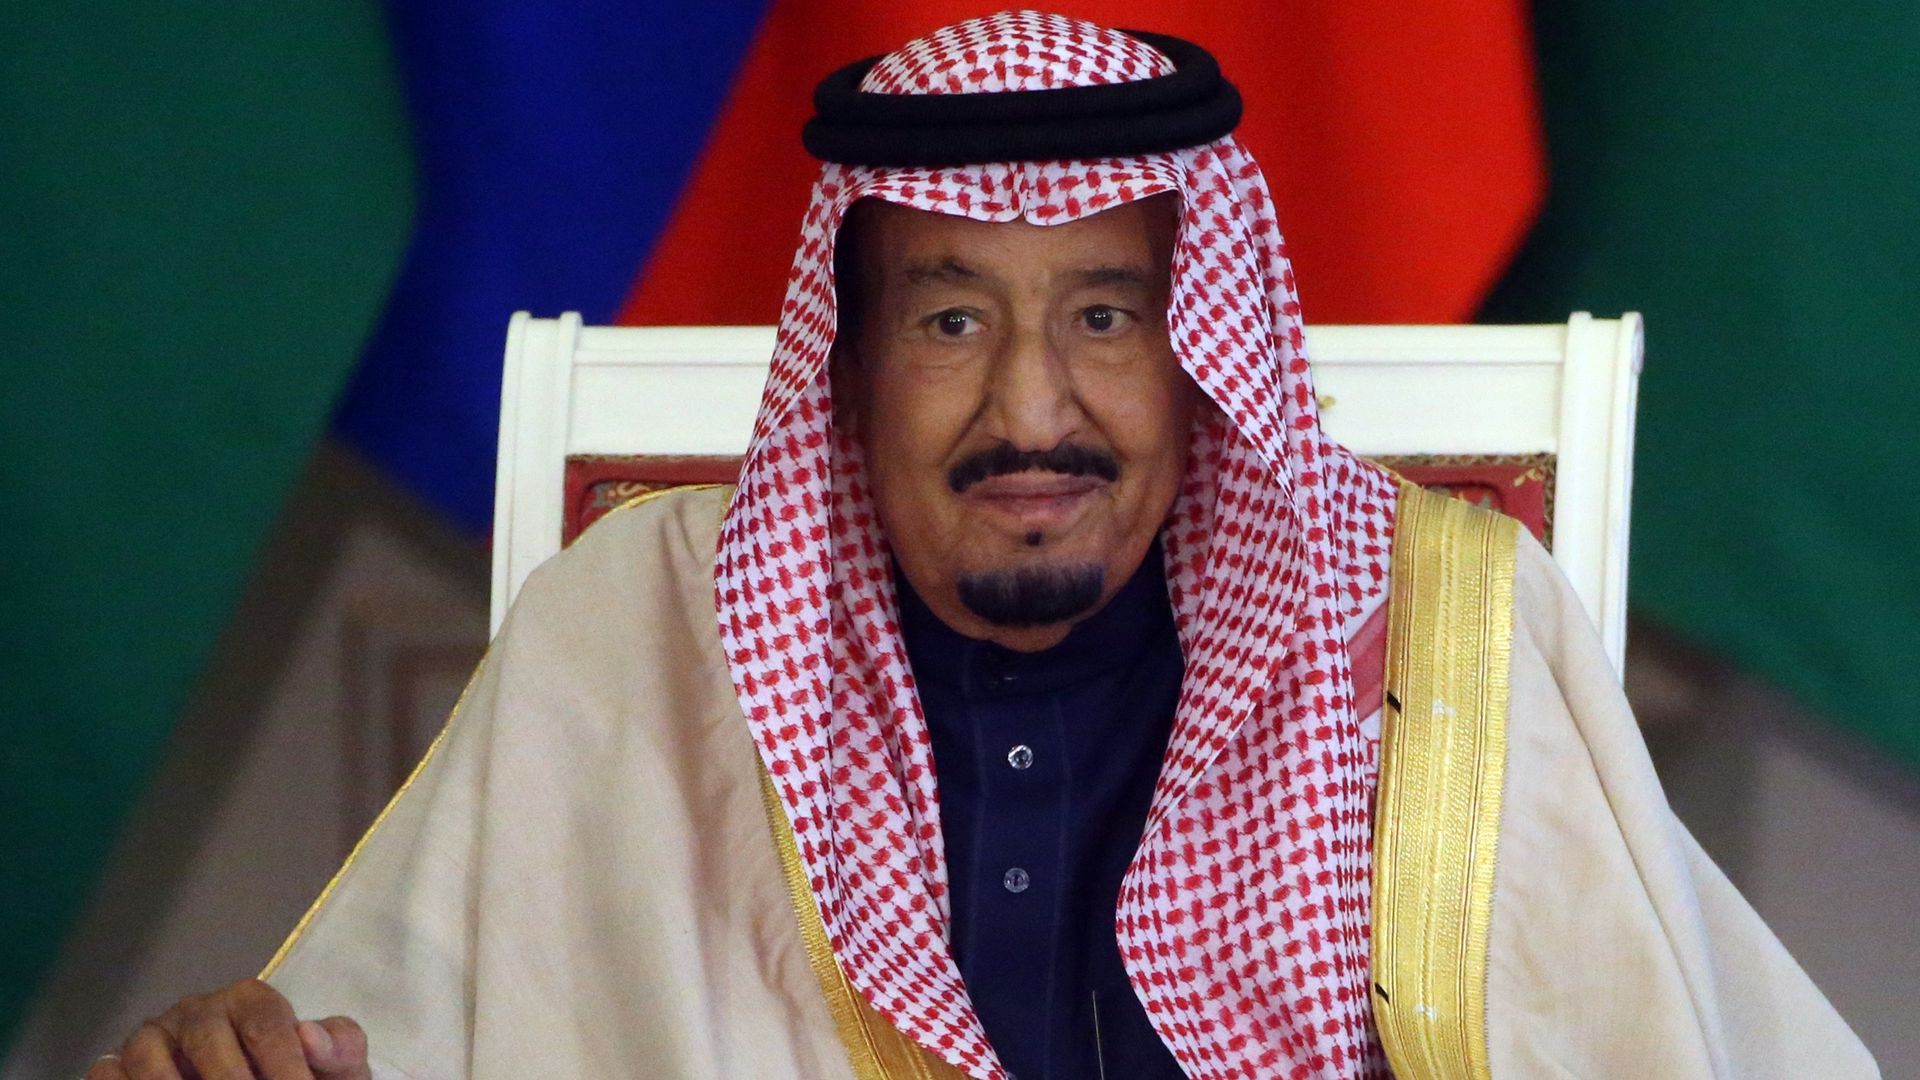 King Salman bin Abdulaziz Al Saud during talks at the Grand Kremlin Palace on October 5, 2017 in Moscow, Russia.